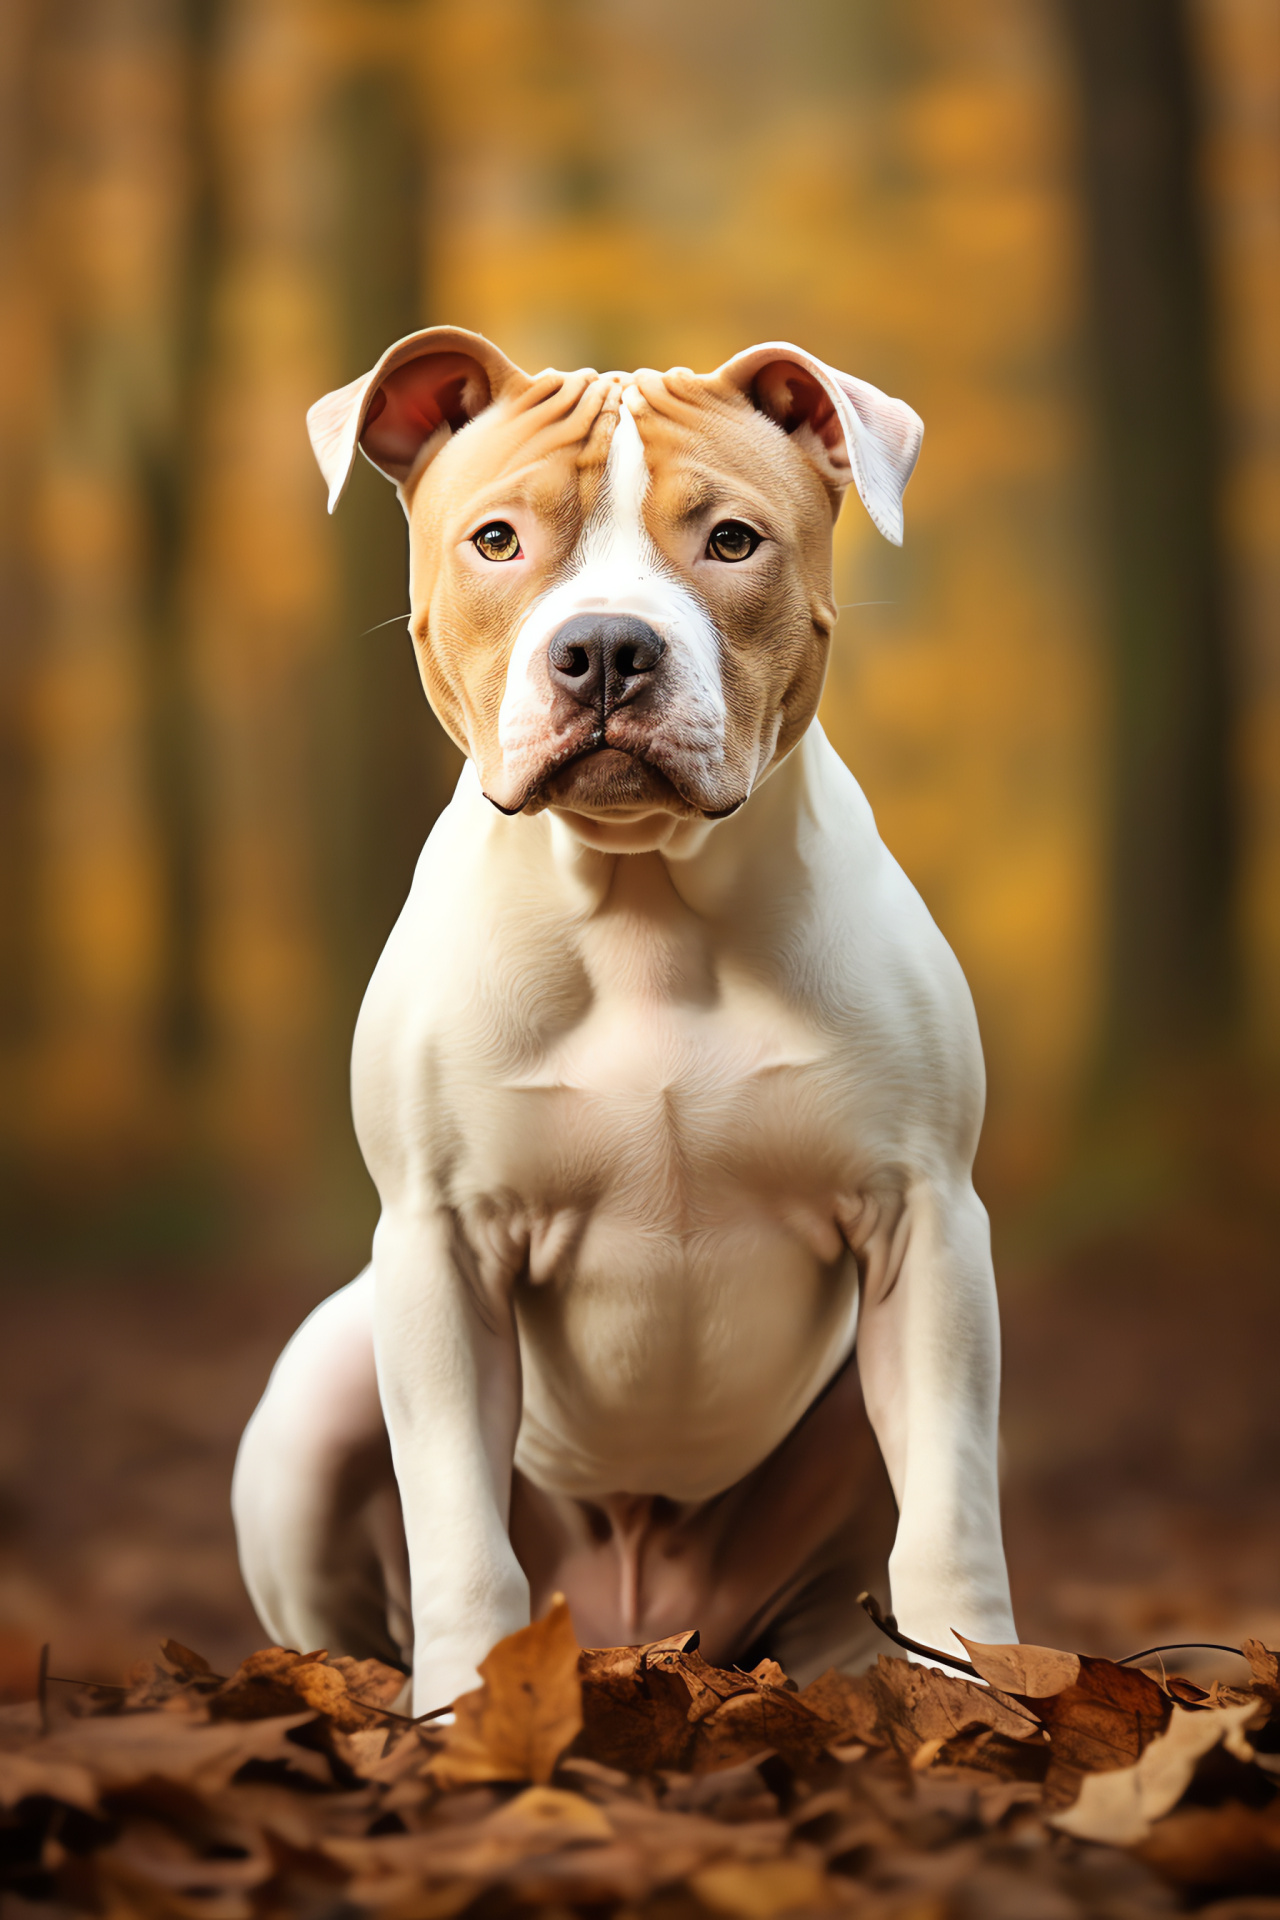 Bully breed, Elegant posture, Bicolor fur, Expansive background, Visual simplicity, HD Phone Image